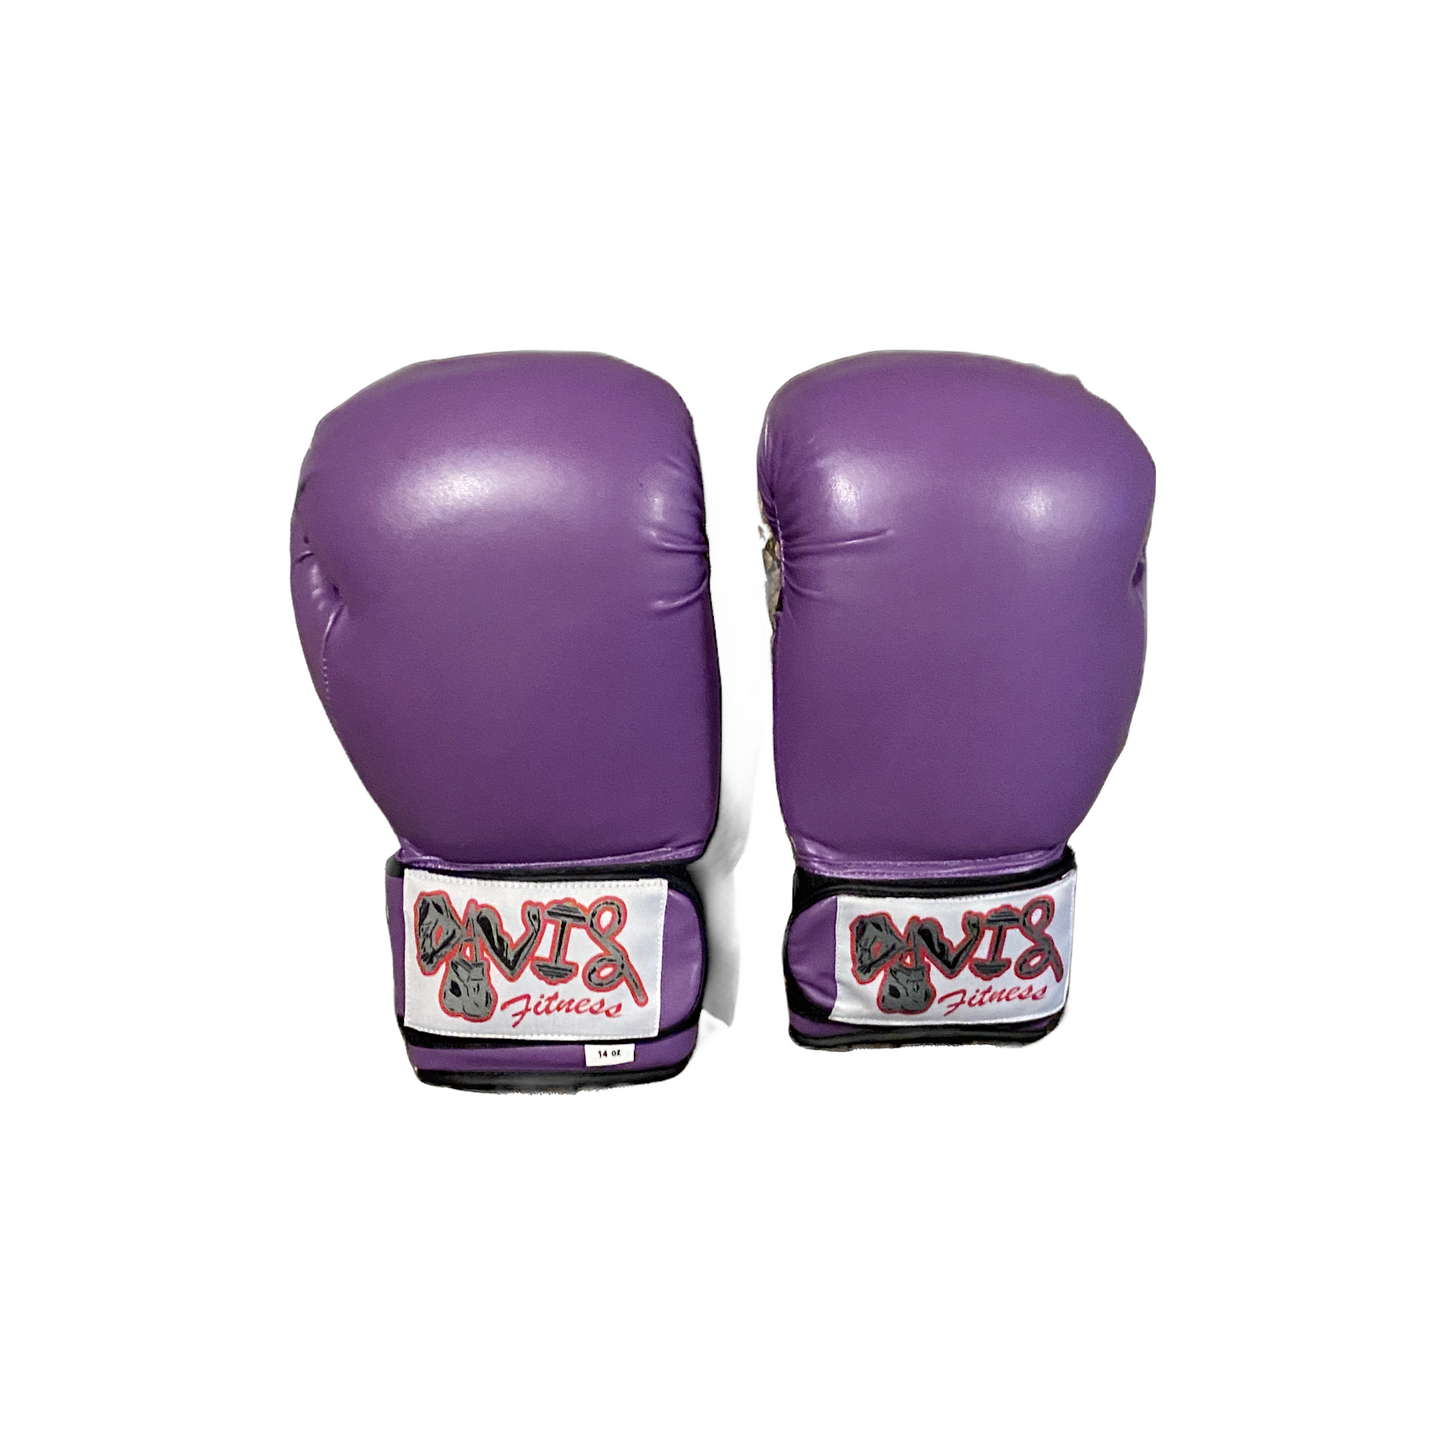 Crown Davis Boxing gloves